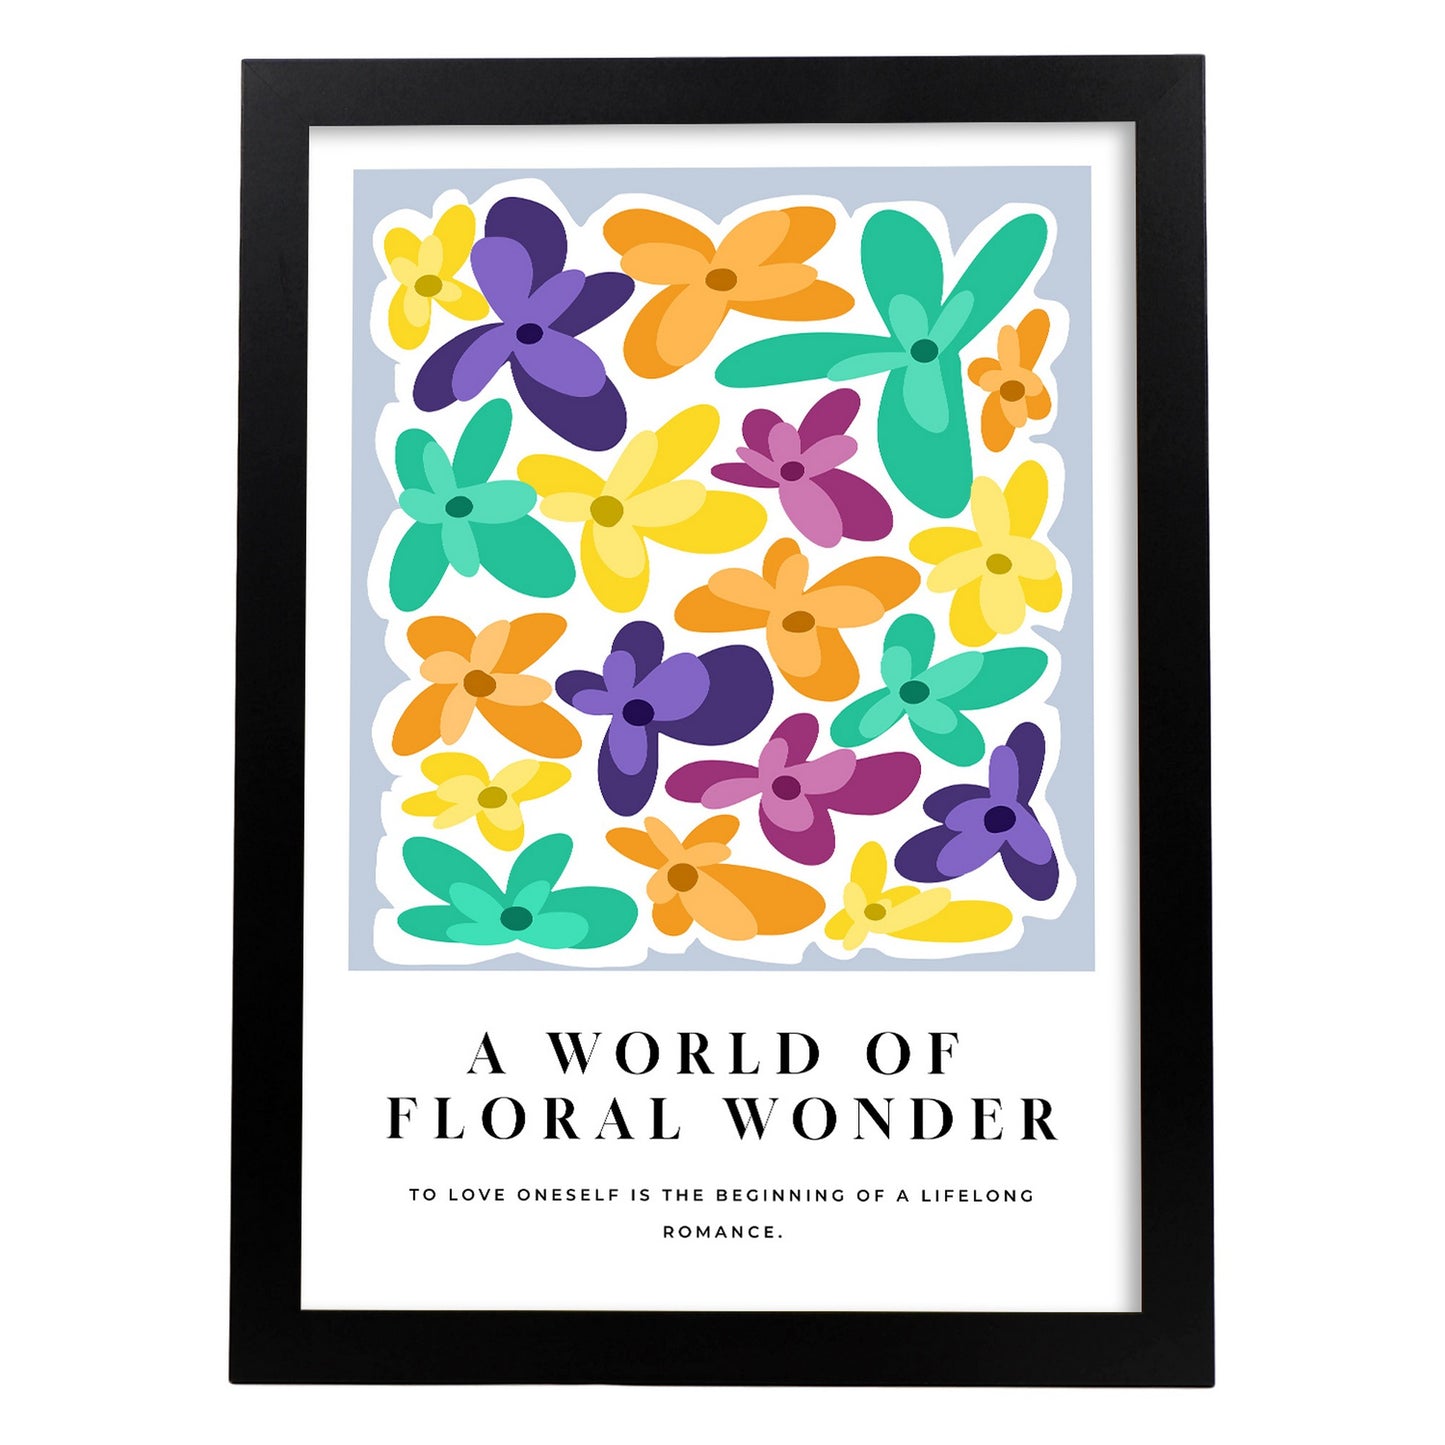 Lámina estética de Un mundo de maravilla floral para diseño de hogar